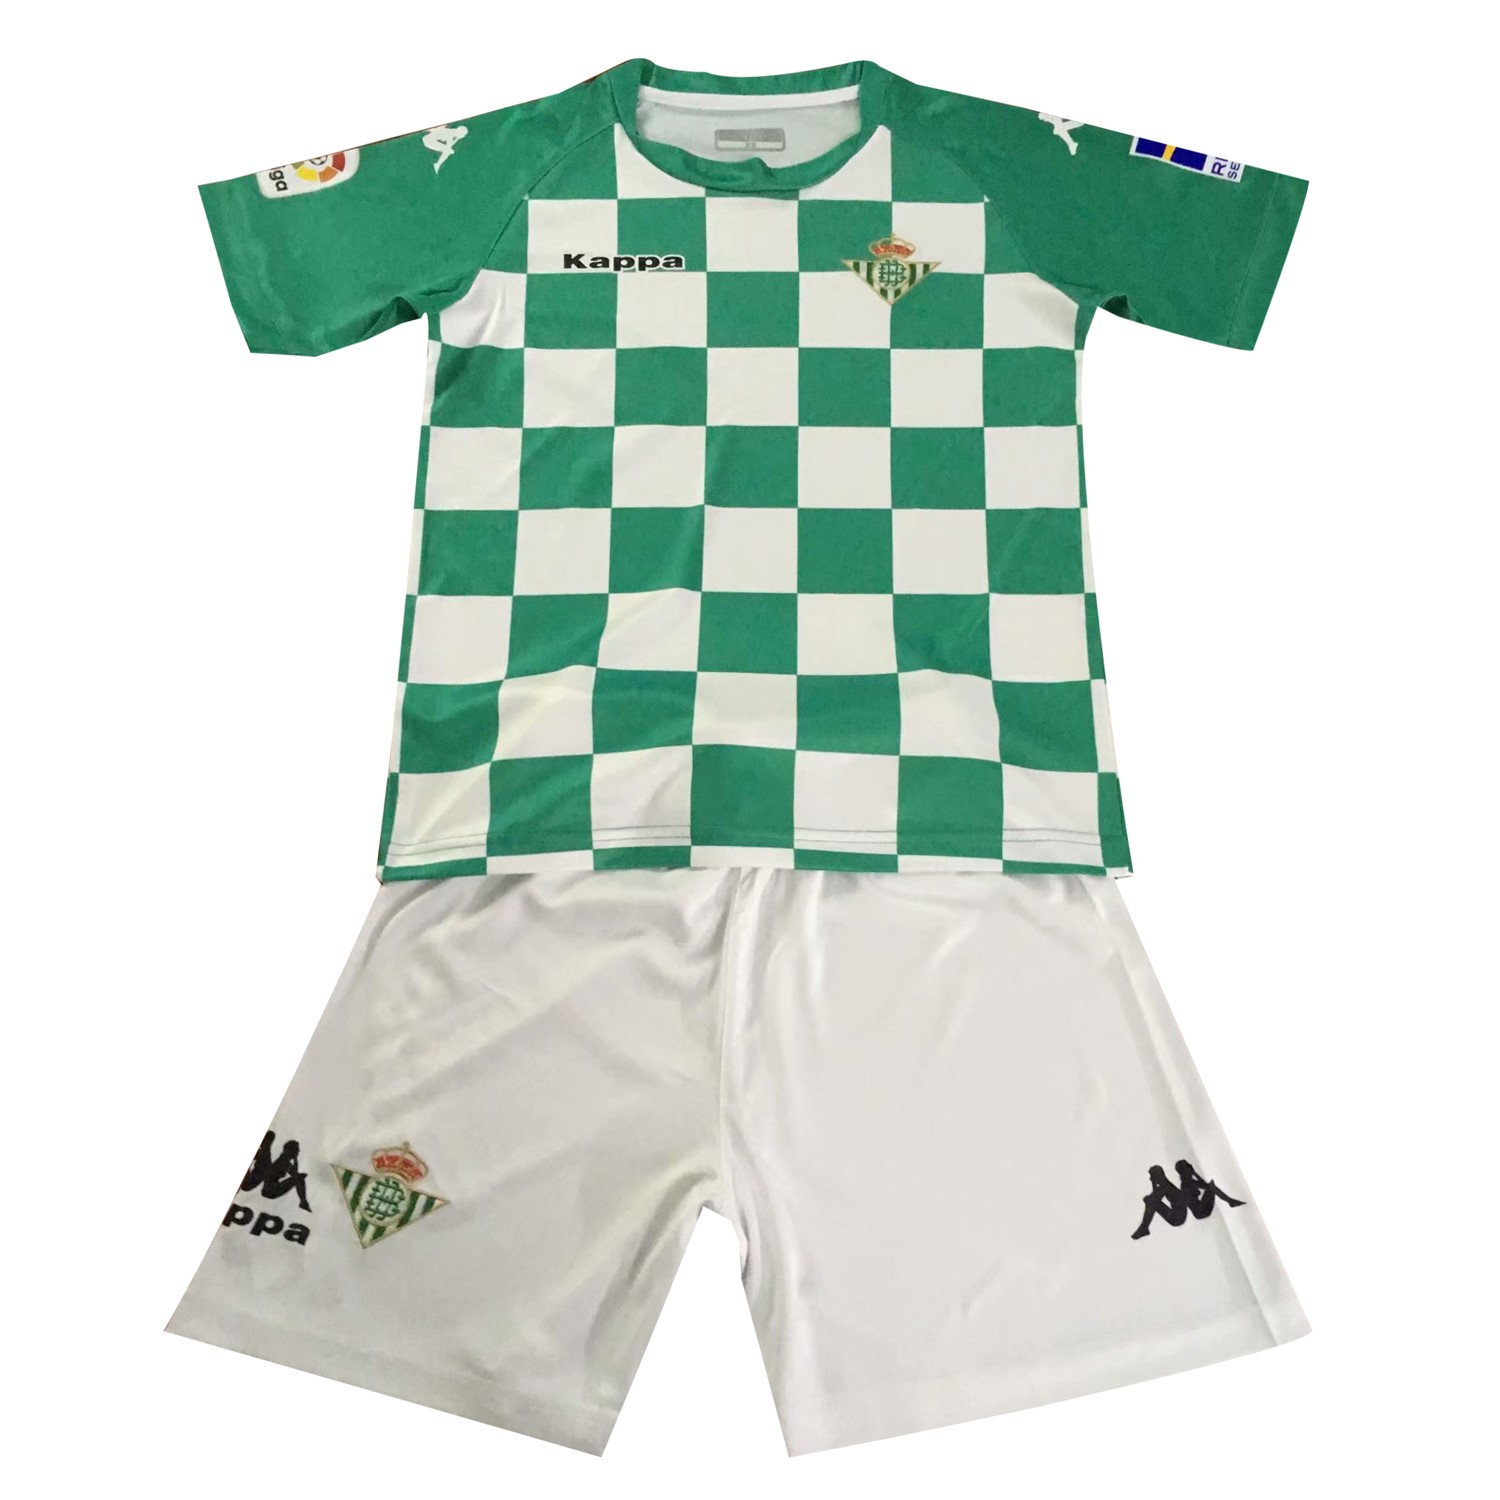 Camiseta Real Betis Edición Conmemorativa Niño 2019/20 Verde